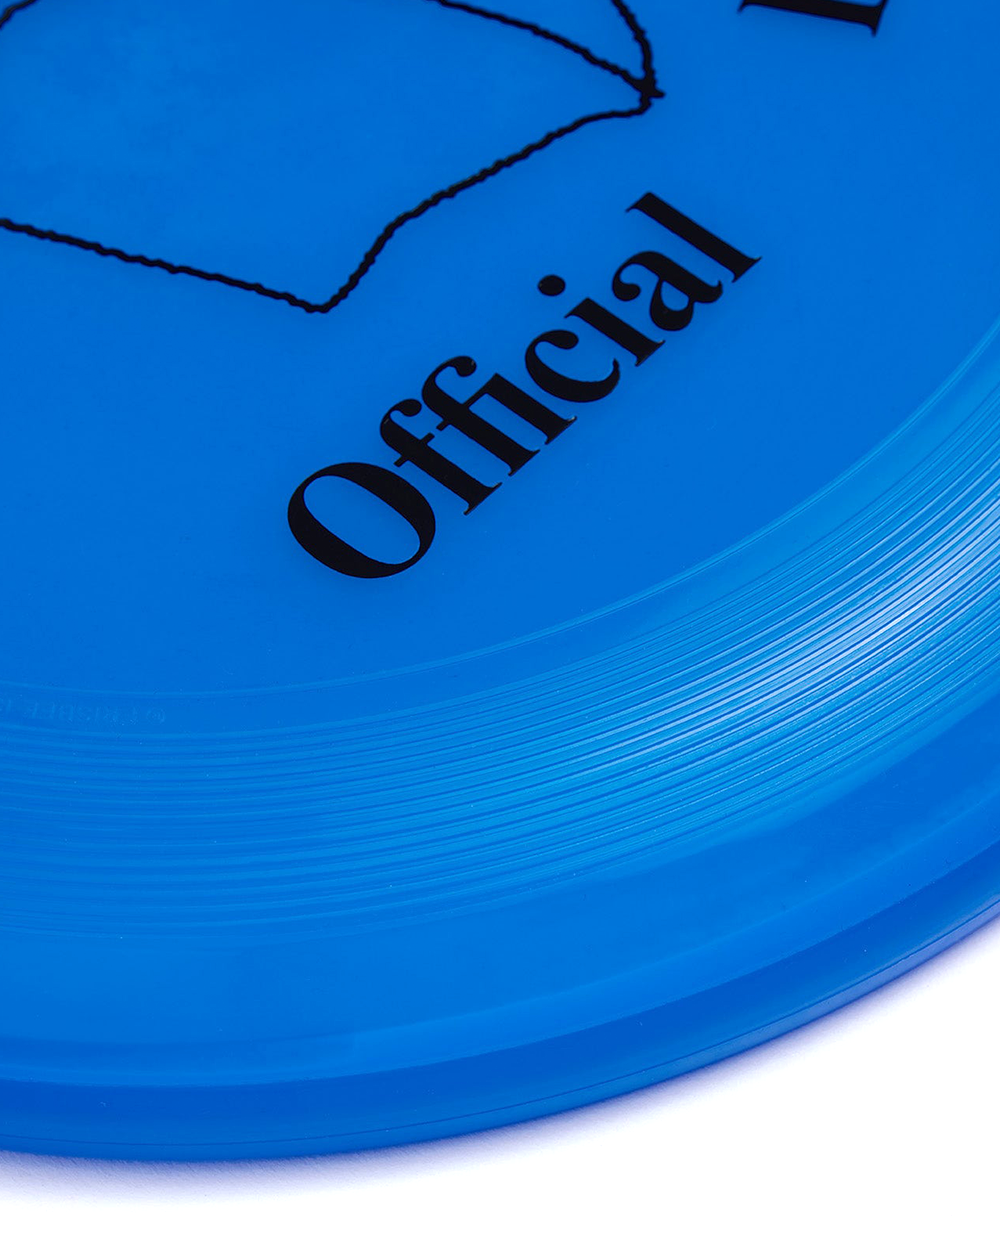 Official Disc - Blue